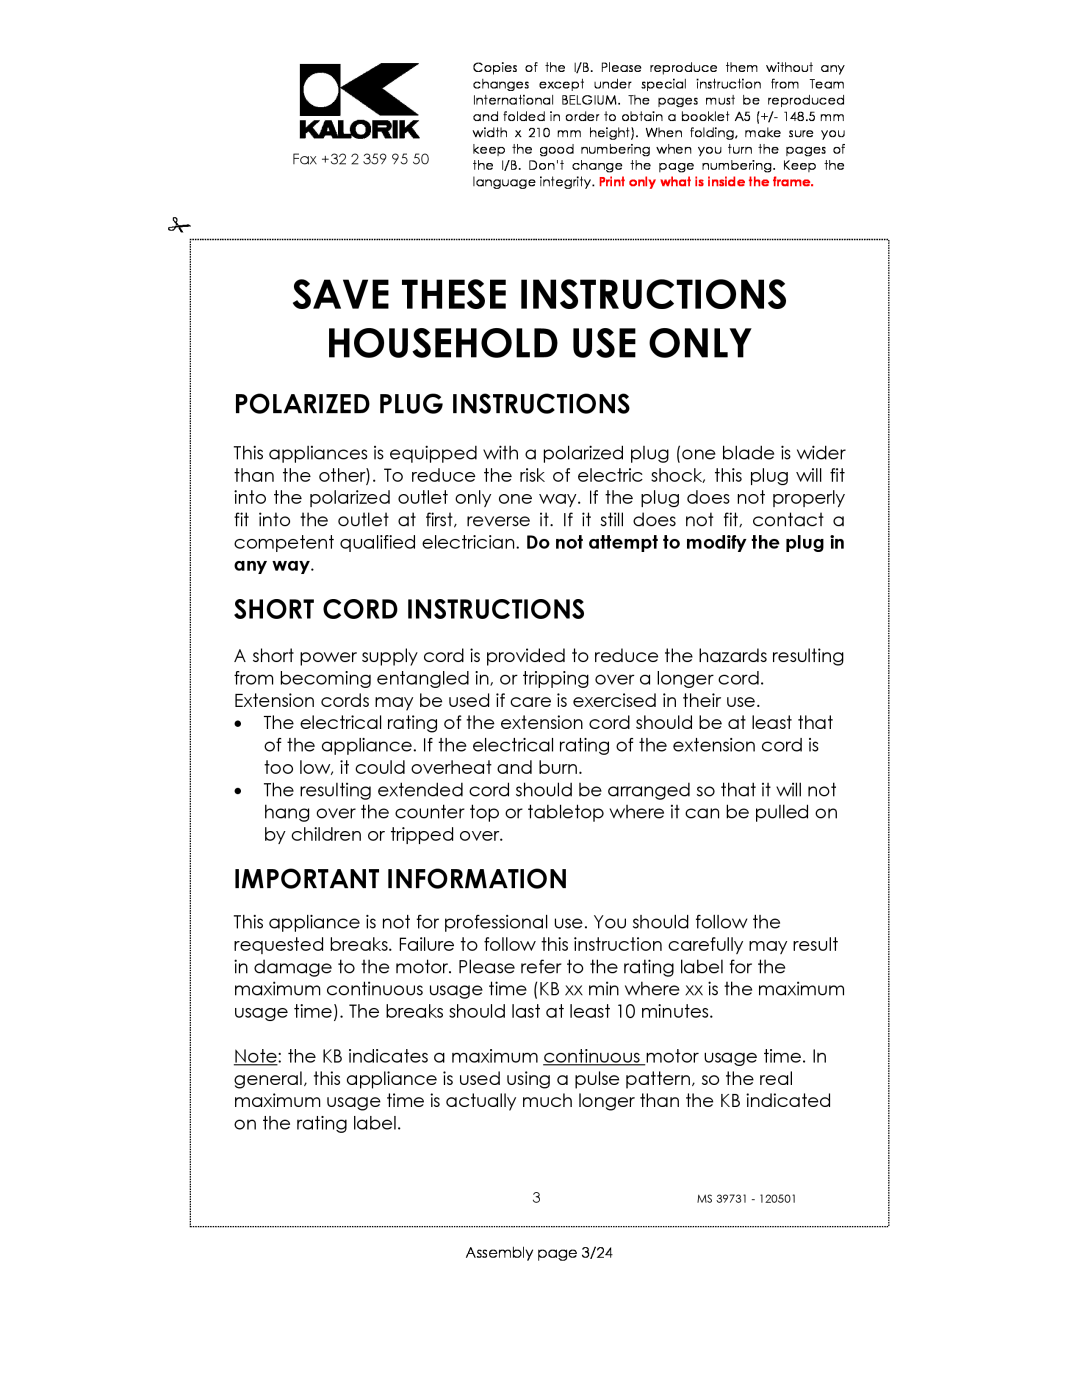 Kalorik MS 39731 manual Save These Instructions Household Use Only, Polarized Plug Instructions, Short Cord Instructions 